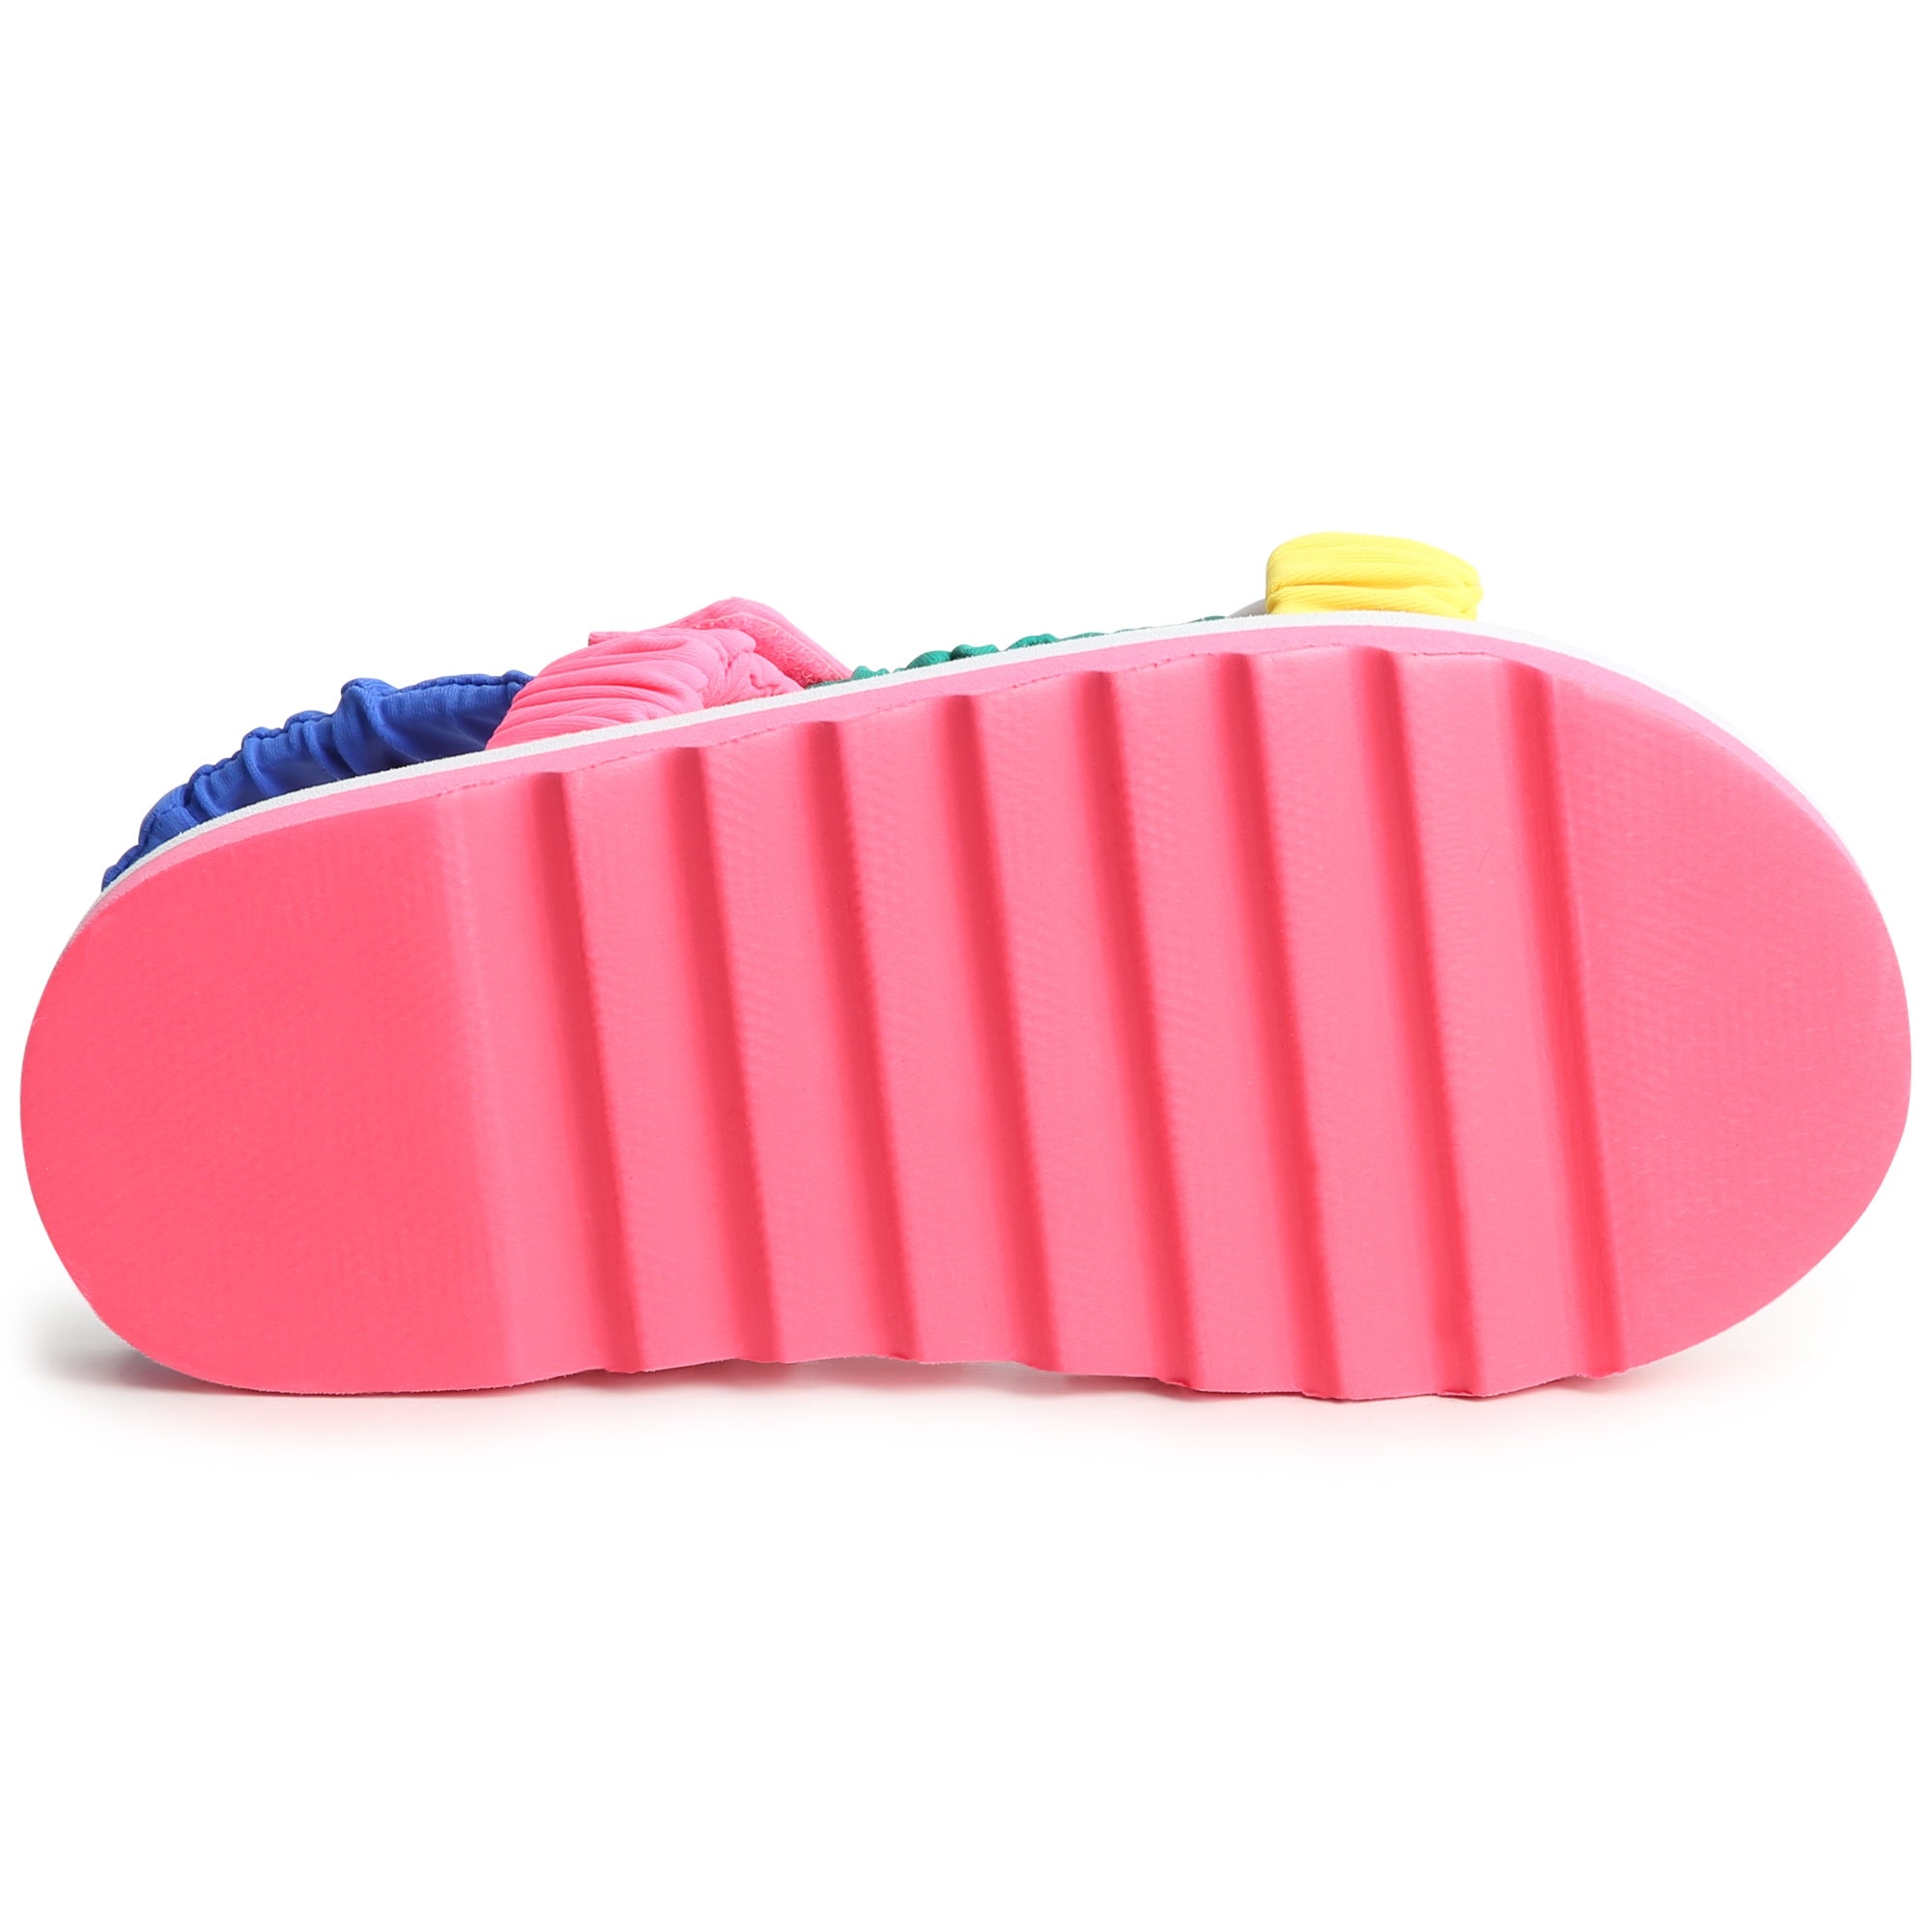 Girls Multicolor Velcro Strap Sandals